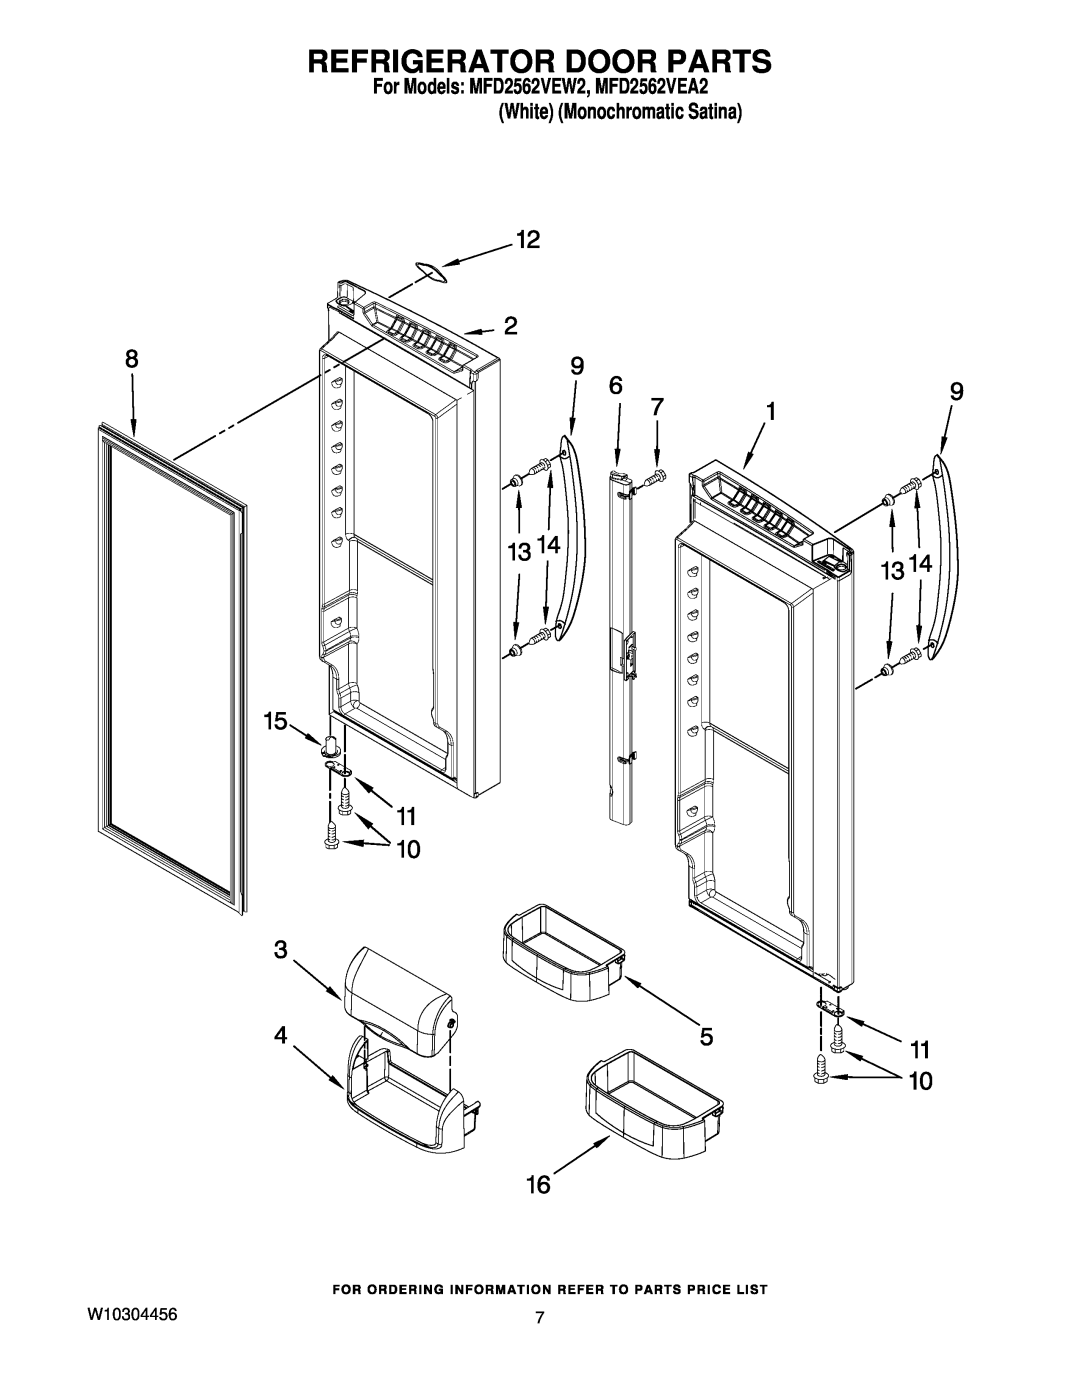 Maytag manual Refrigerator Door Parts, W10304456, For Models MFD2562VEW2, MFD2562VEA2 White Monochromatic Satina 